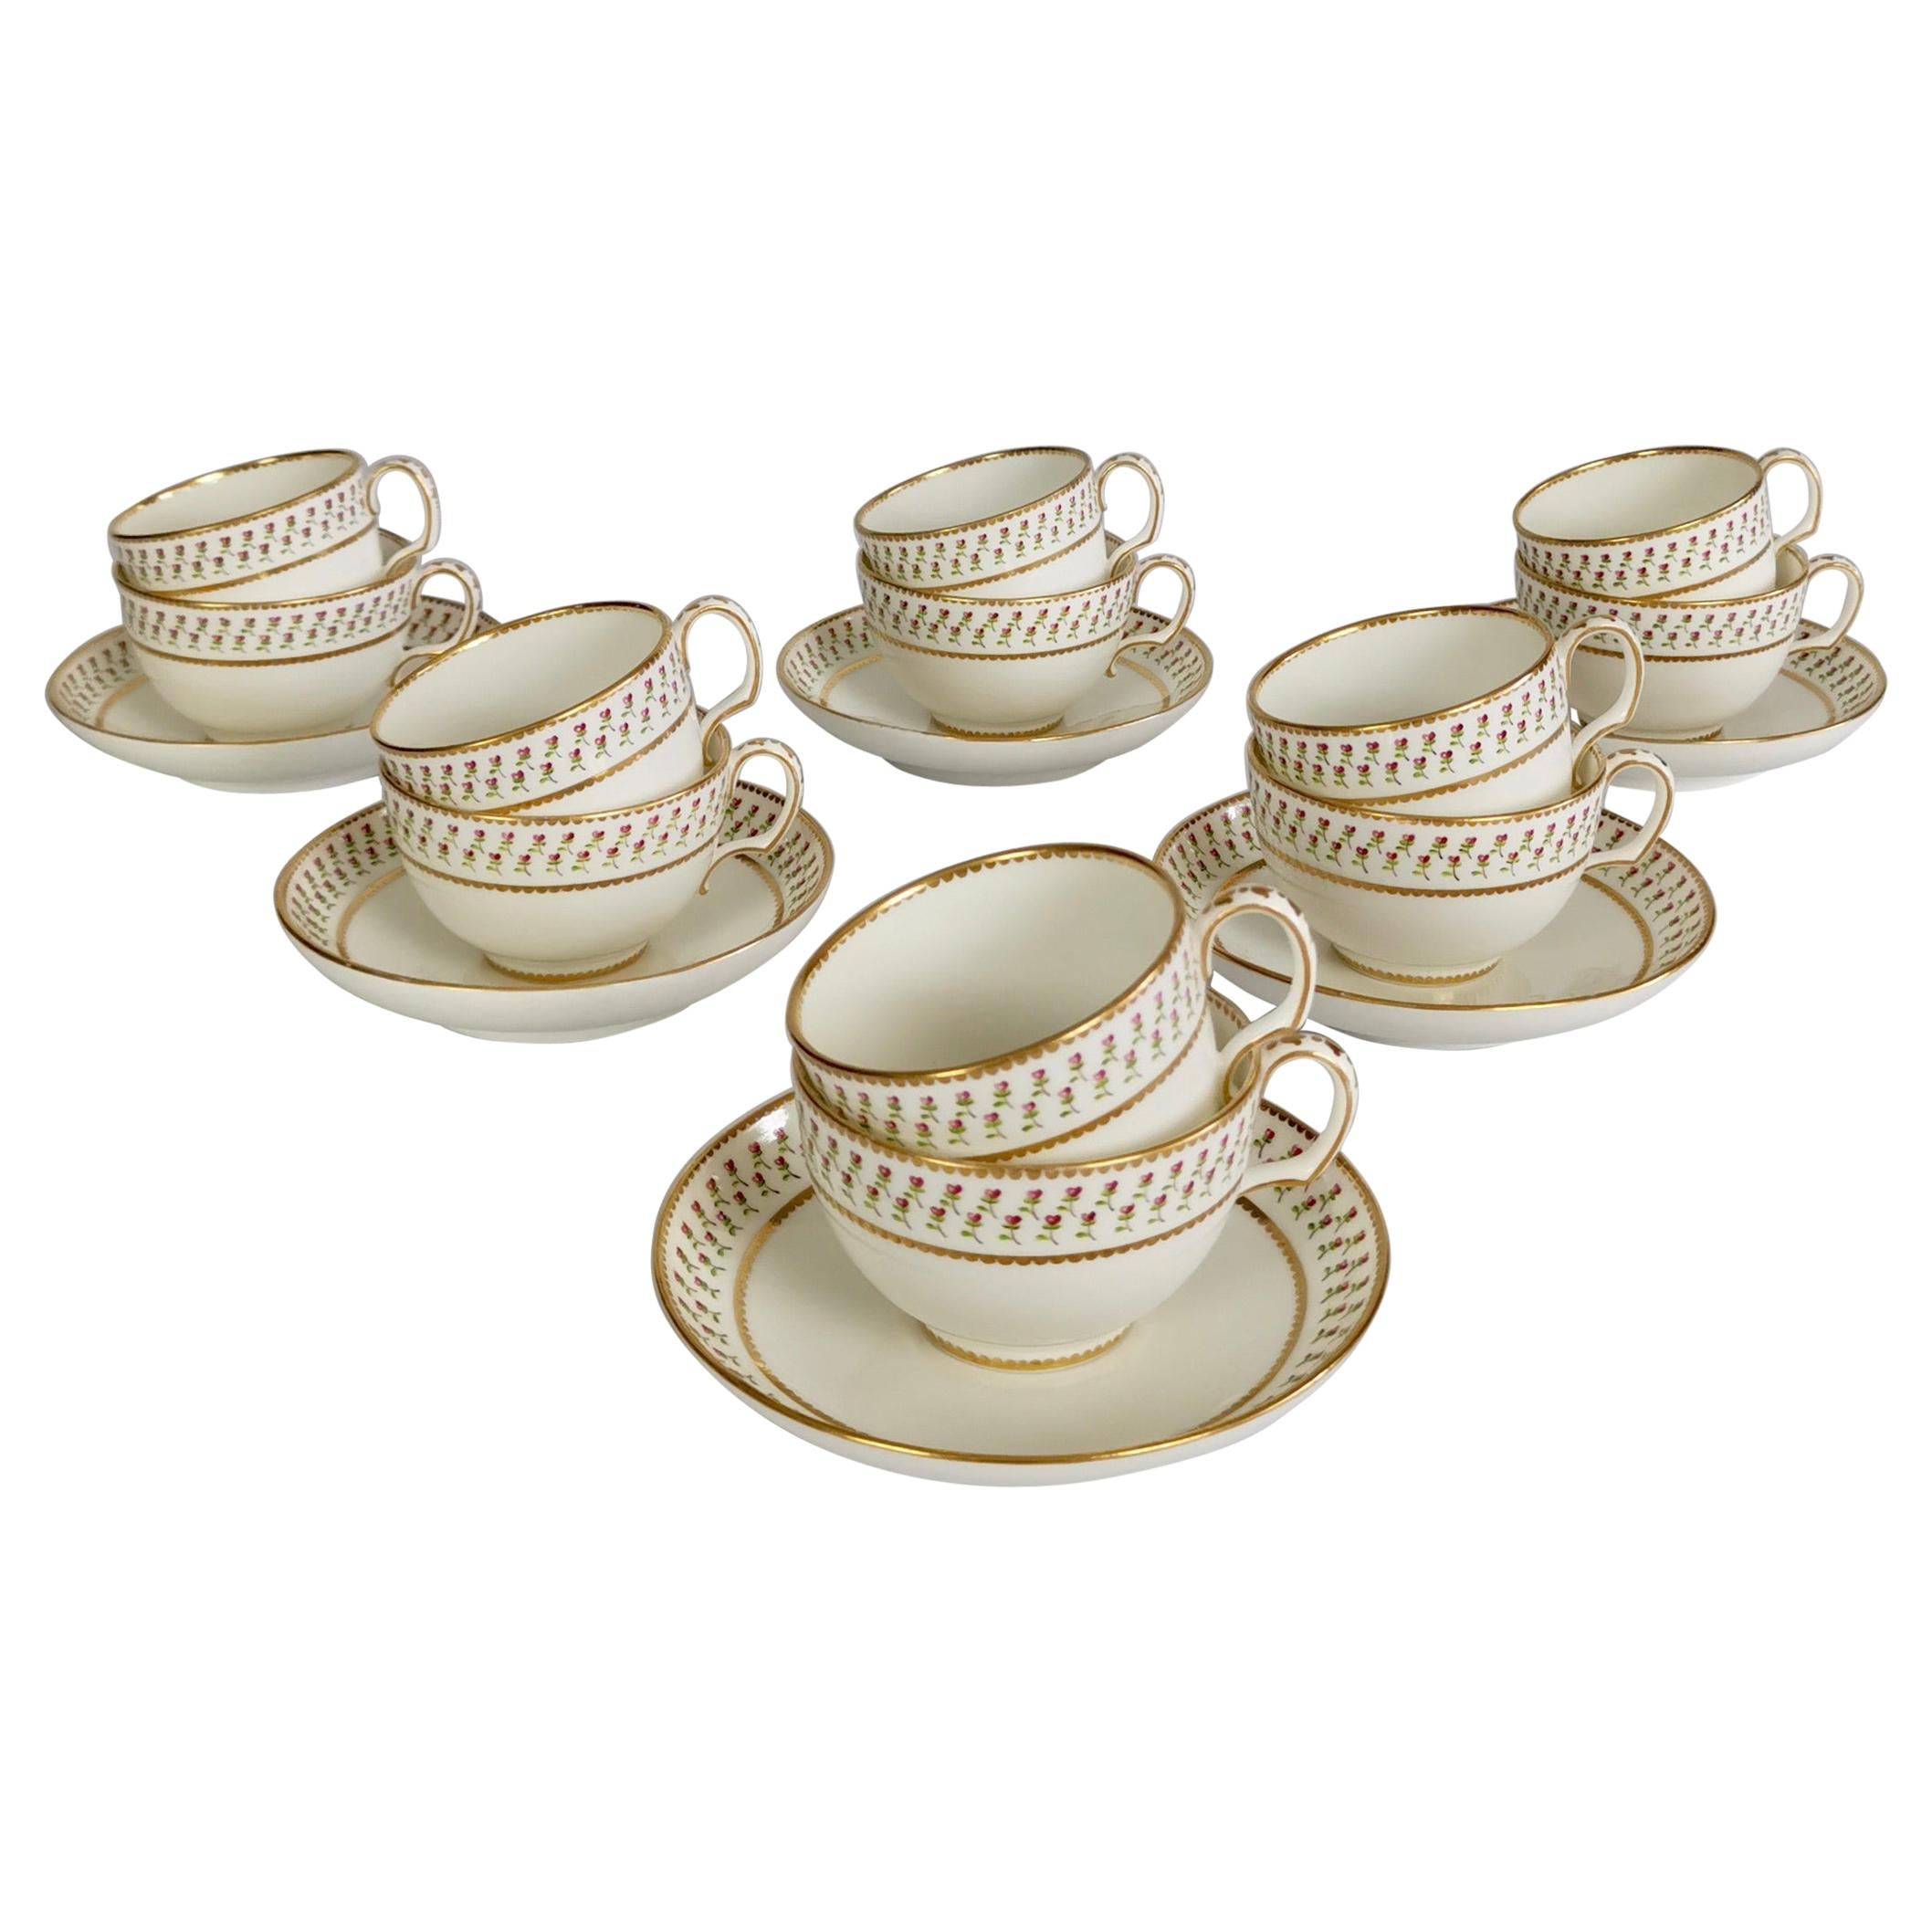 Derby King Street Set of 6 Porcelain Tea Trios, White with Tiny Roses, 1848-1862